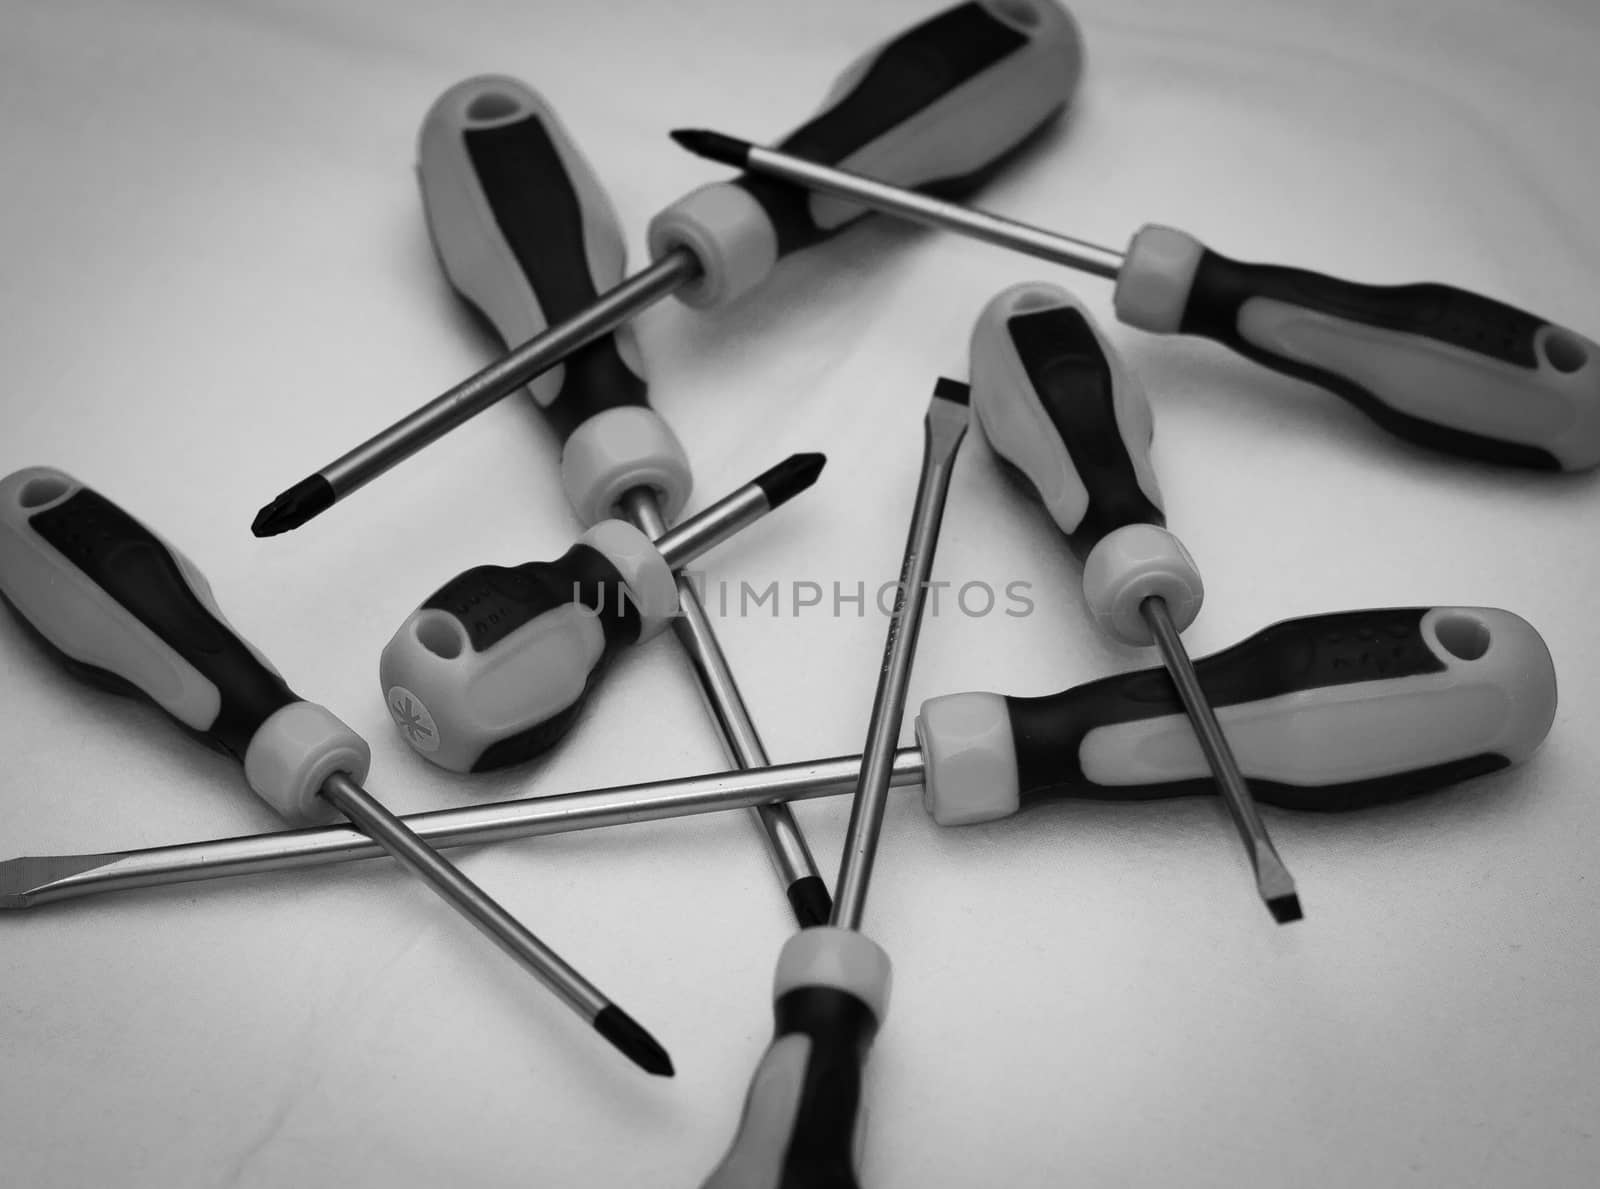 Variety of screwdrivers by leorantala